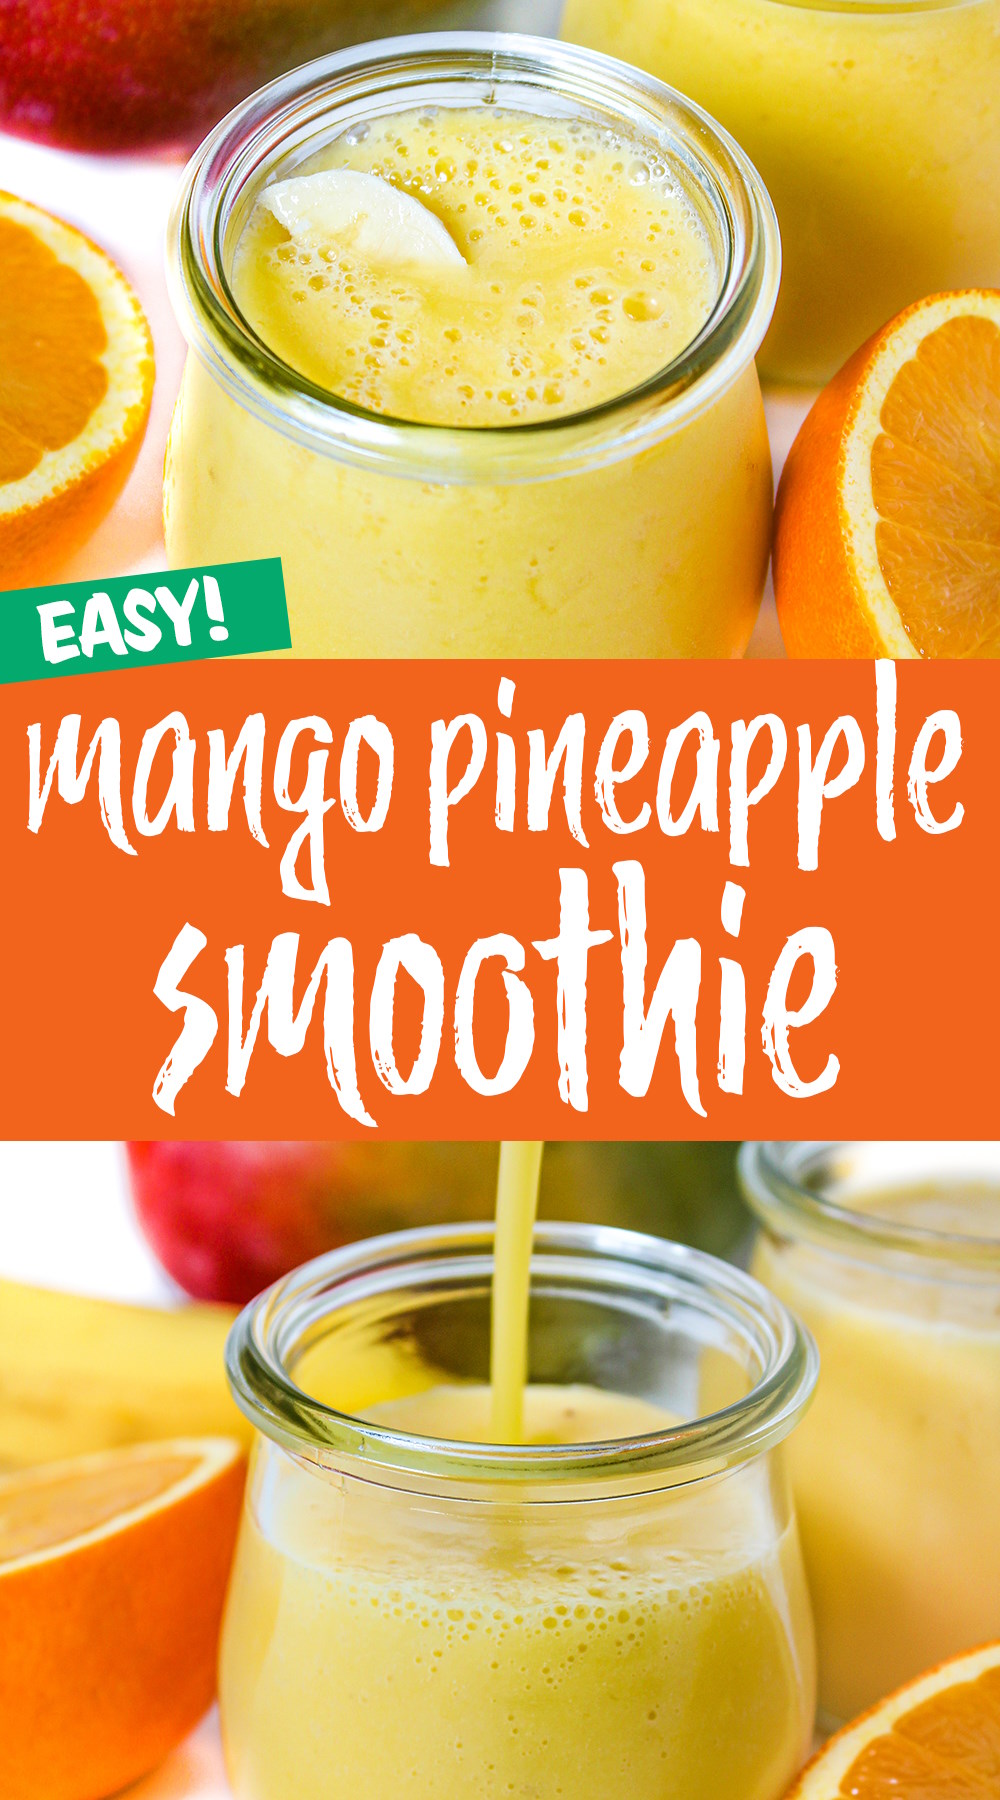 Mango Pineapple Smoothie (Vegan!) - The Garden Grazer